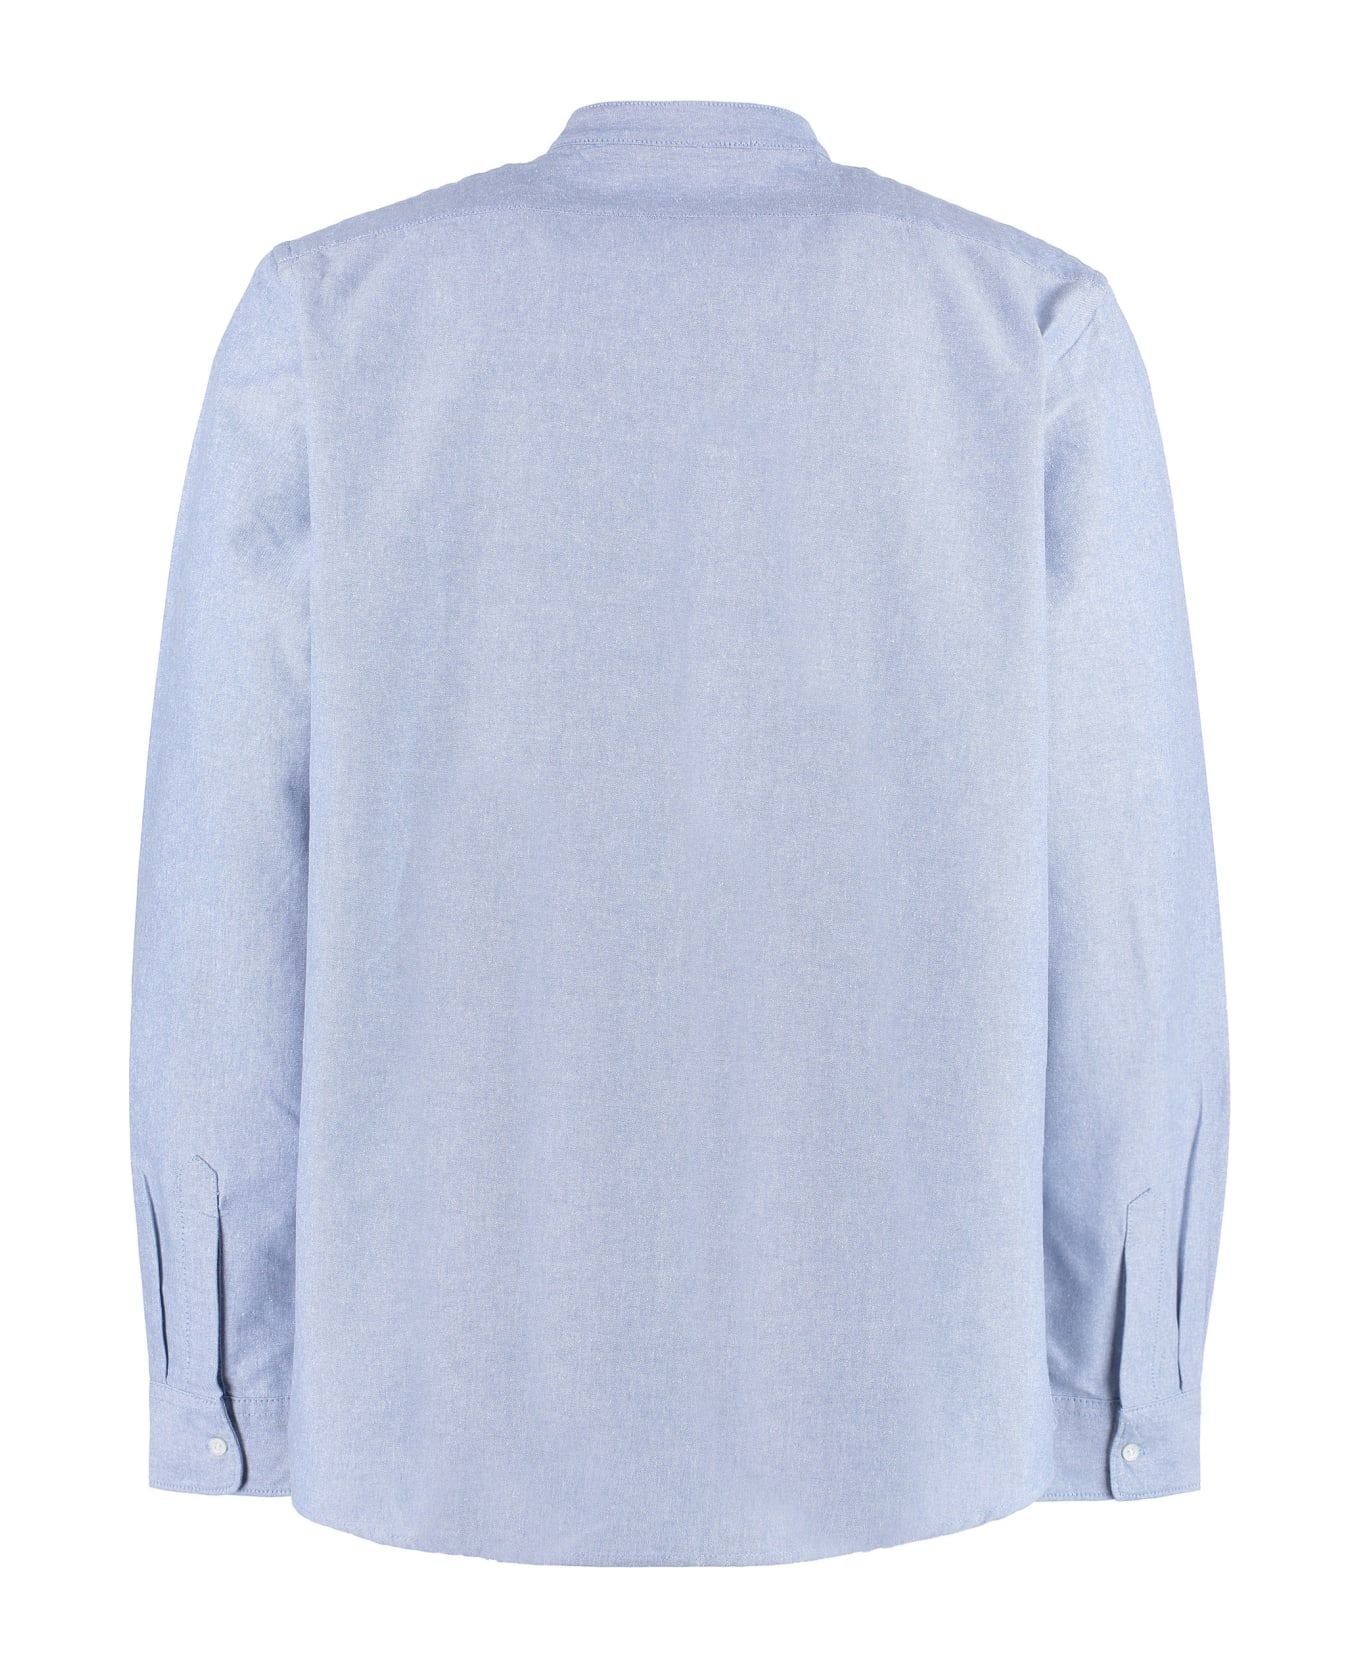 Aspesi Long Sleeve Cotton Shirt - blue